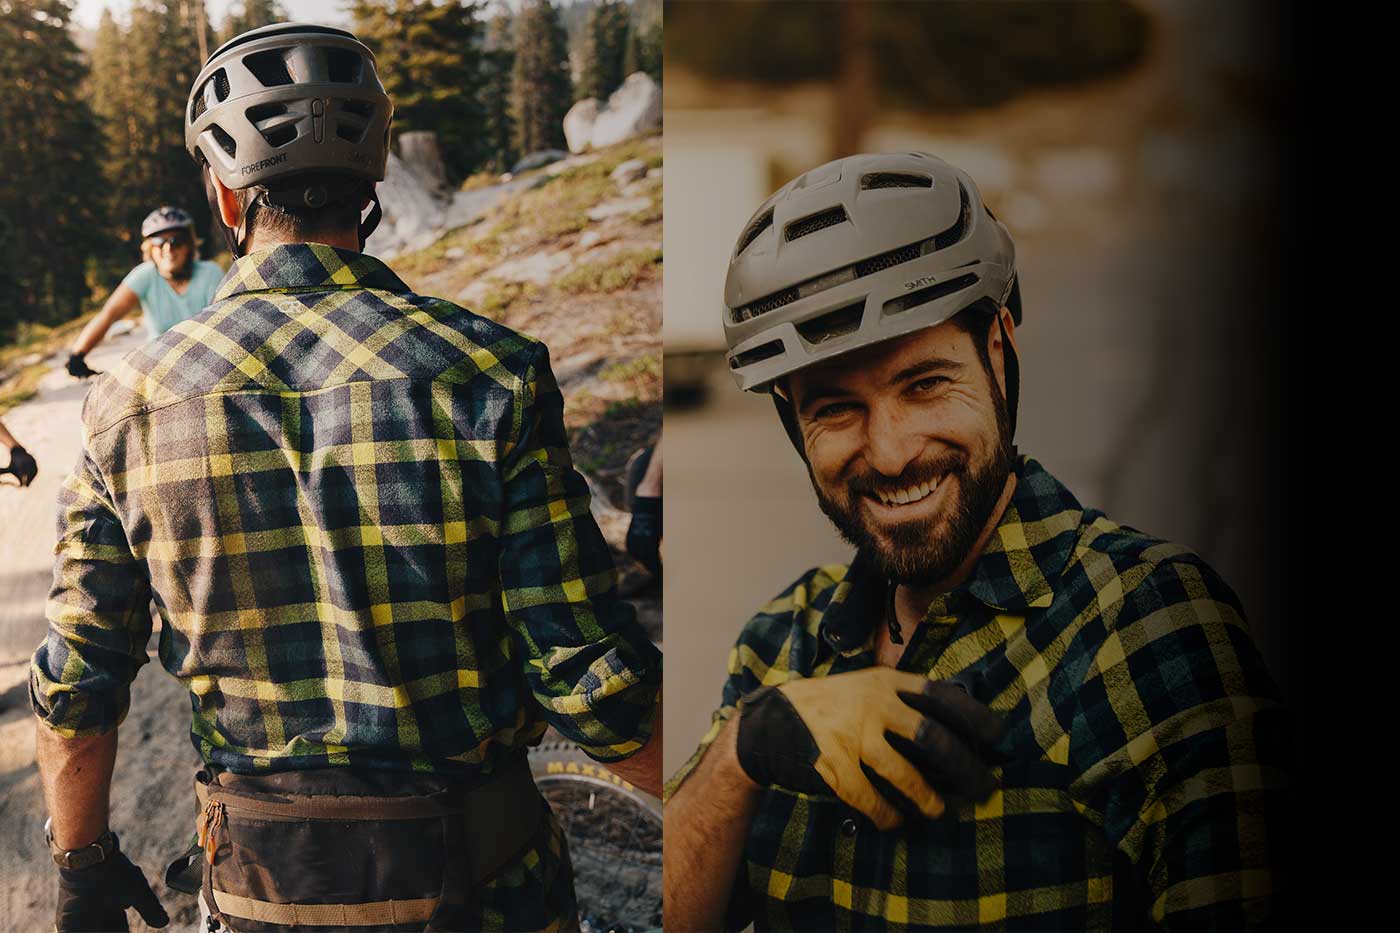 Technical Mountain Bike Flannels - Club Ride Apparel